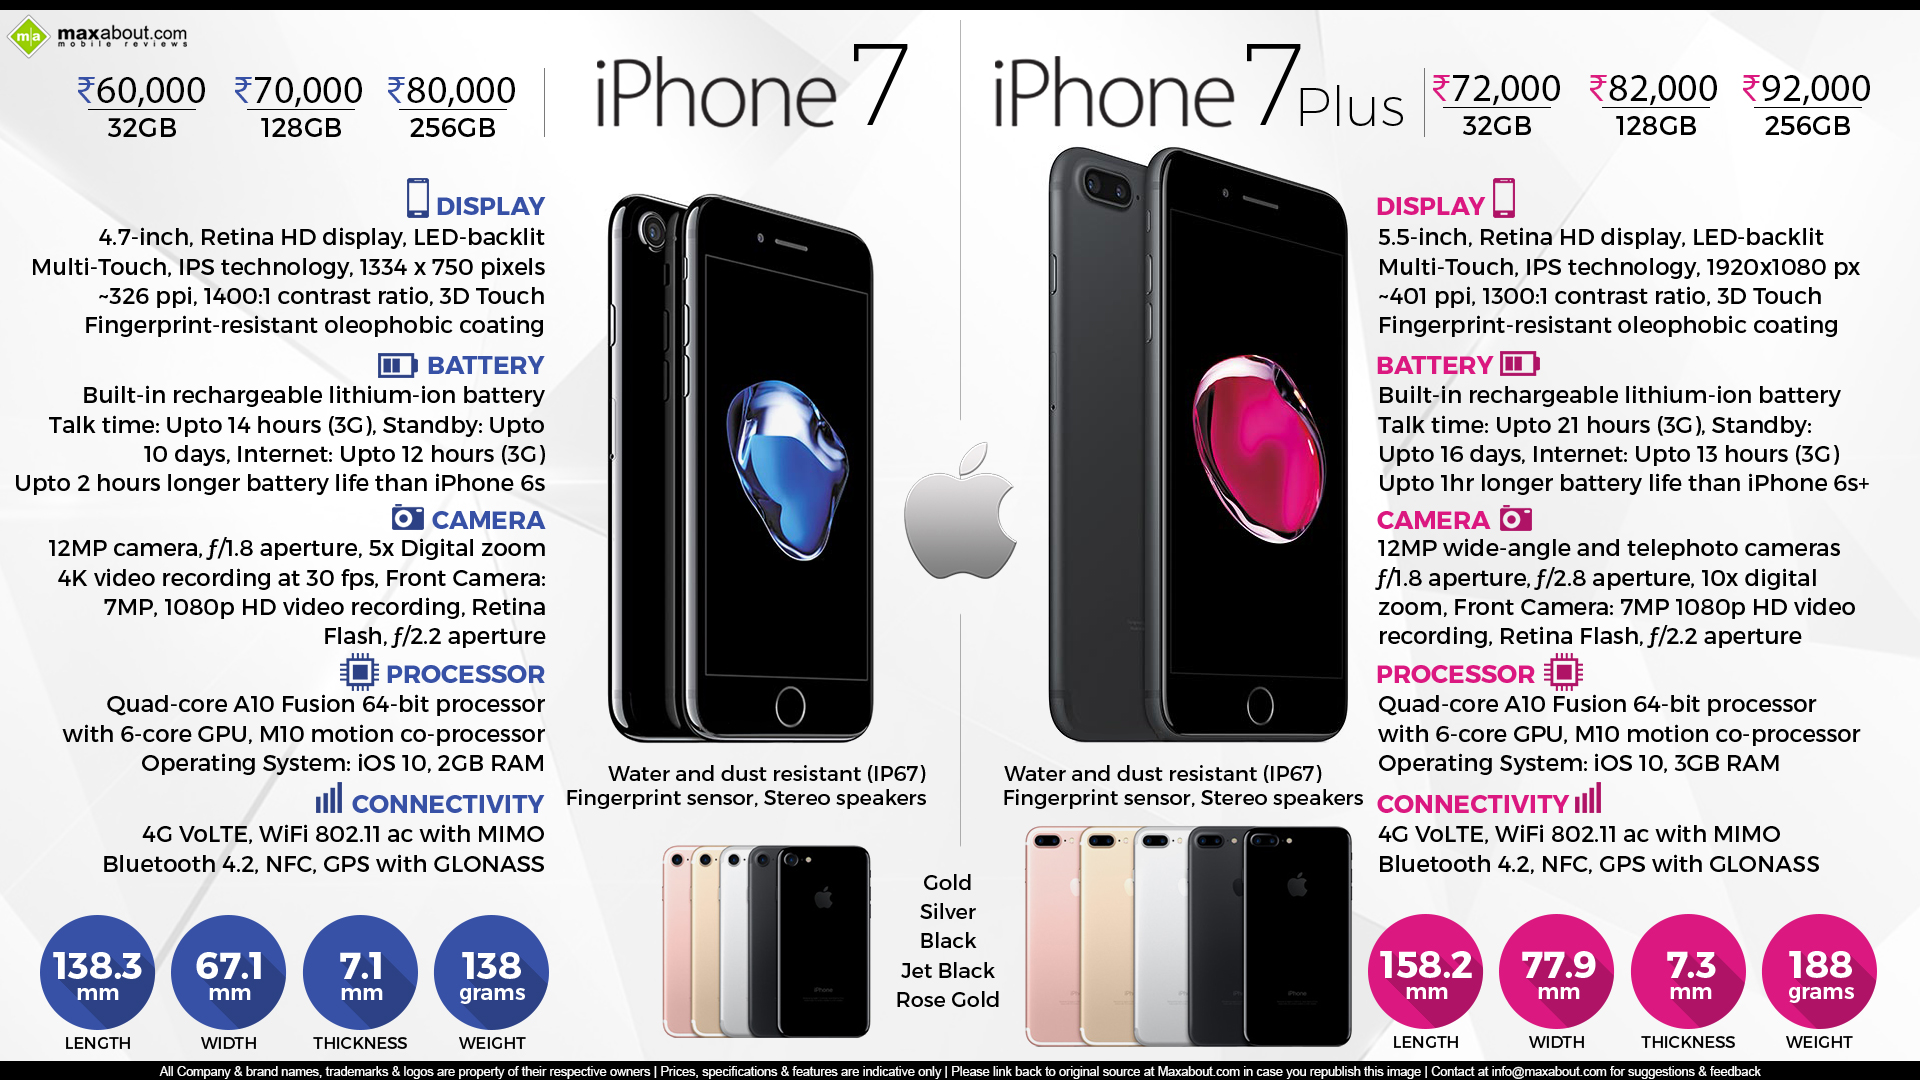 iPhone - iPhone 6 Plus Wallpaper Dimensions | Page 3 | MacRumors ...